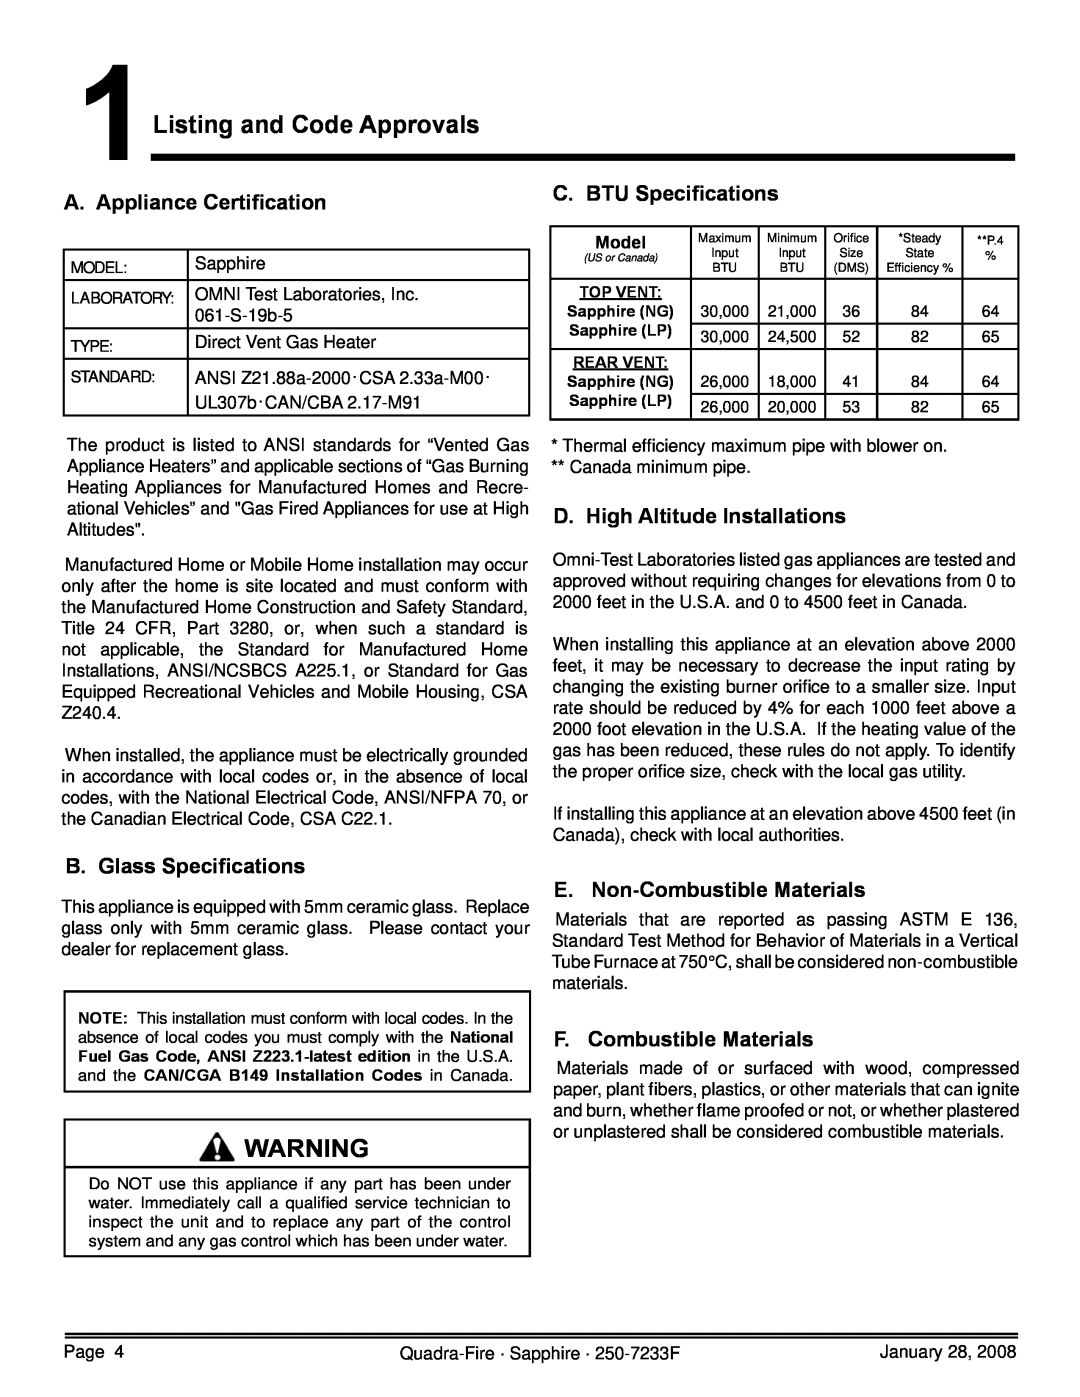 Quadra-Fire 839-1440 1Listing and Code Approvals, A. Appliance Certiﬁcation, C. BTU Speciﬁcations, B. Glass Speciﬁcations 